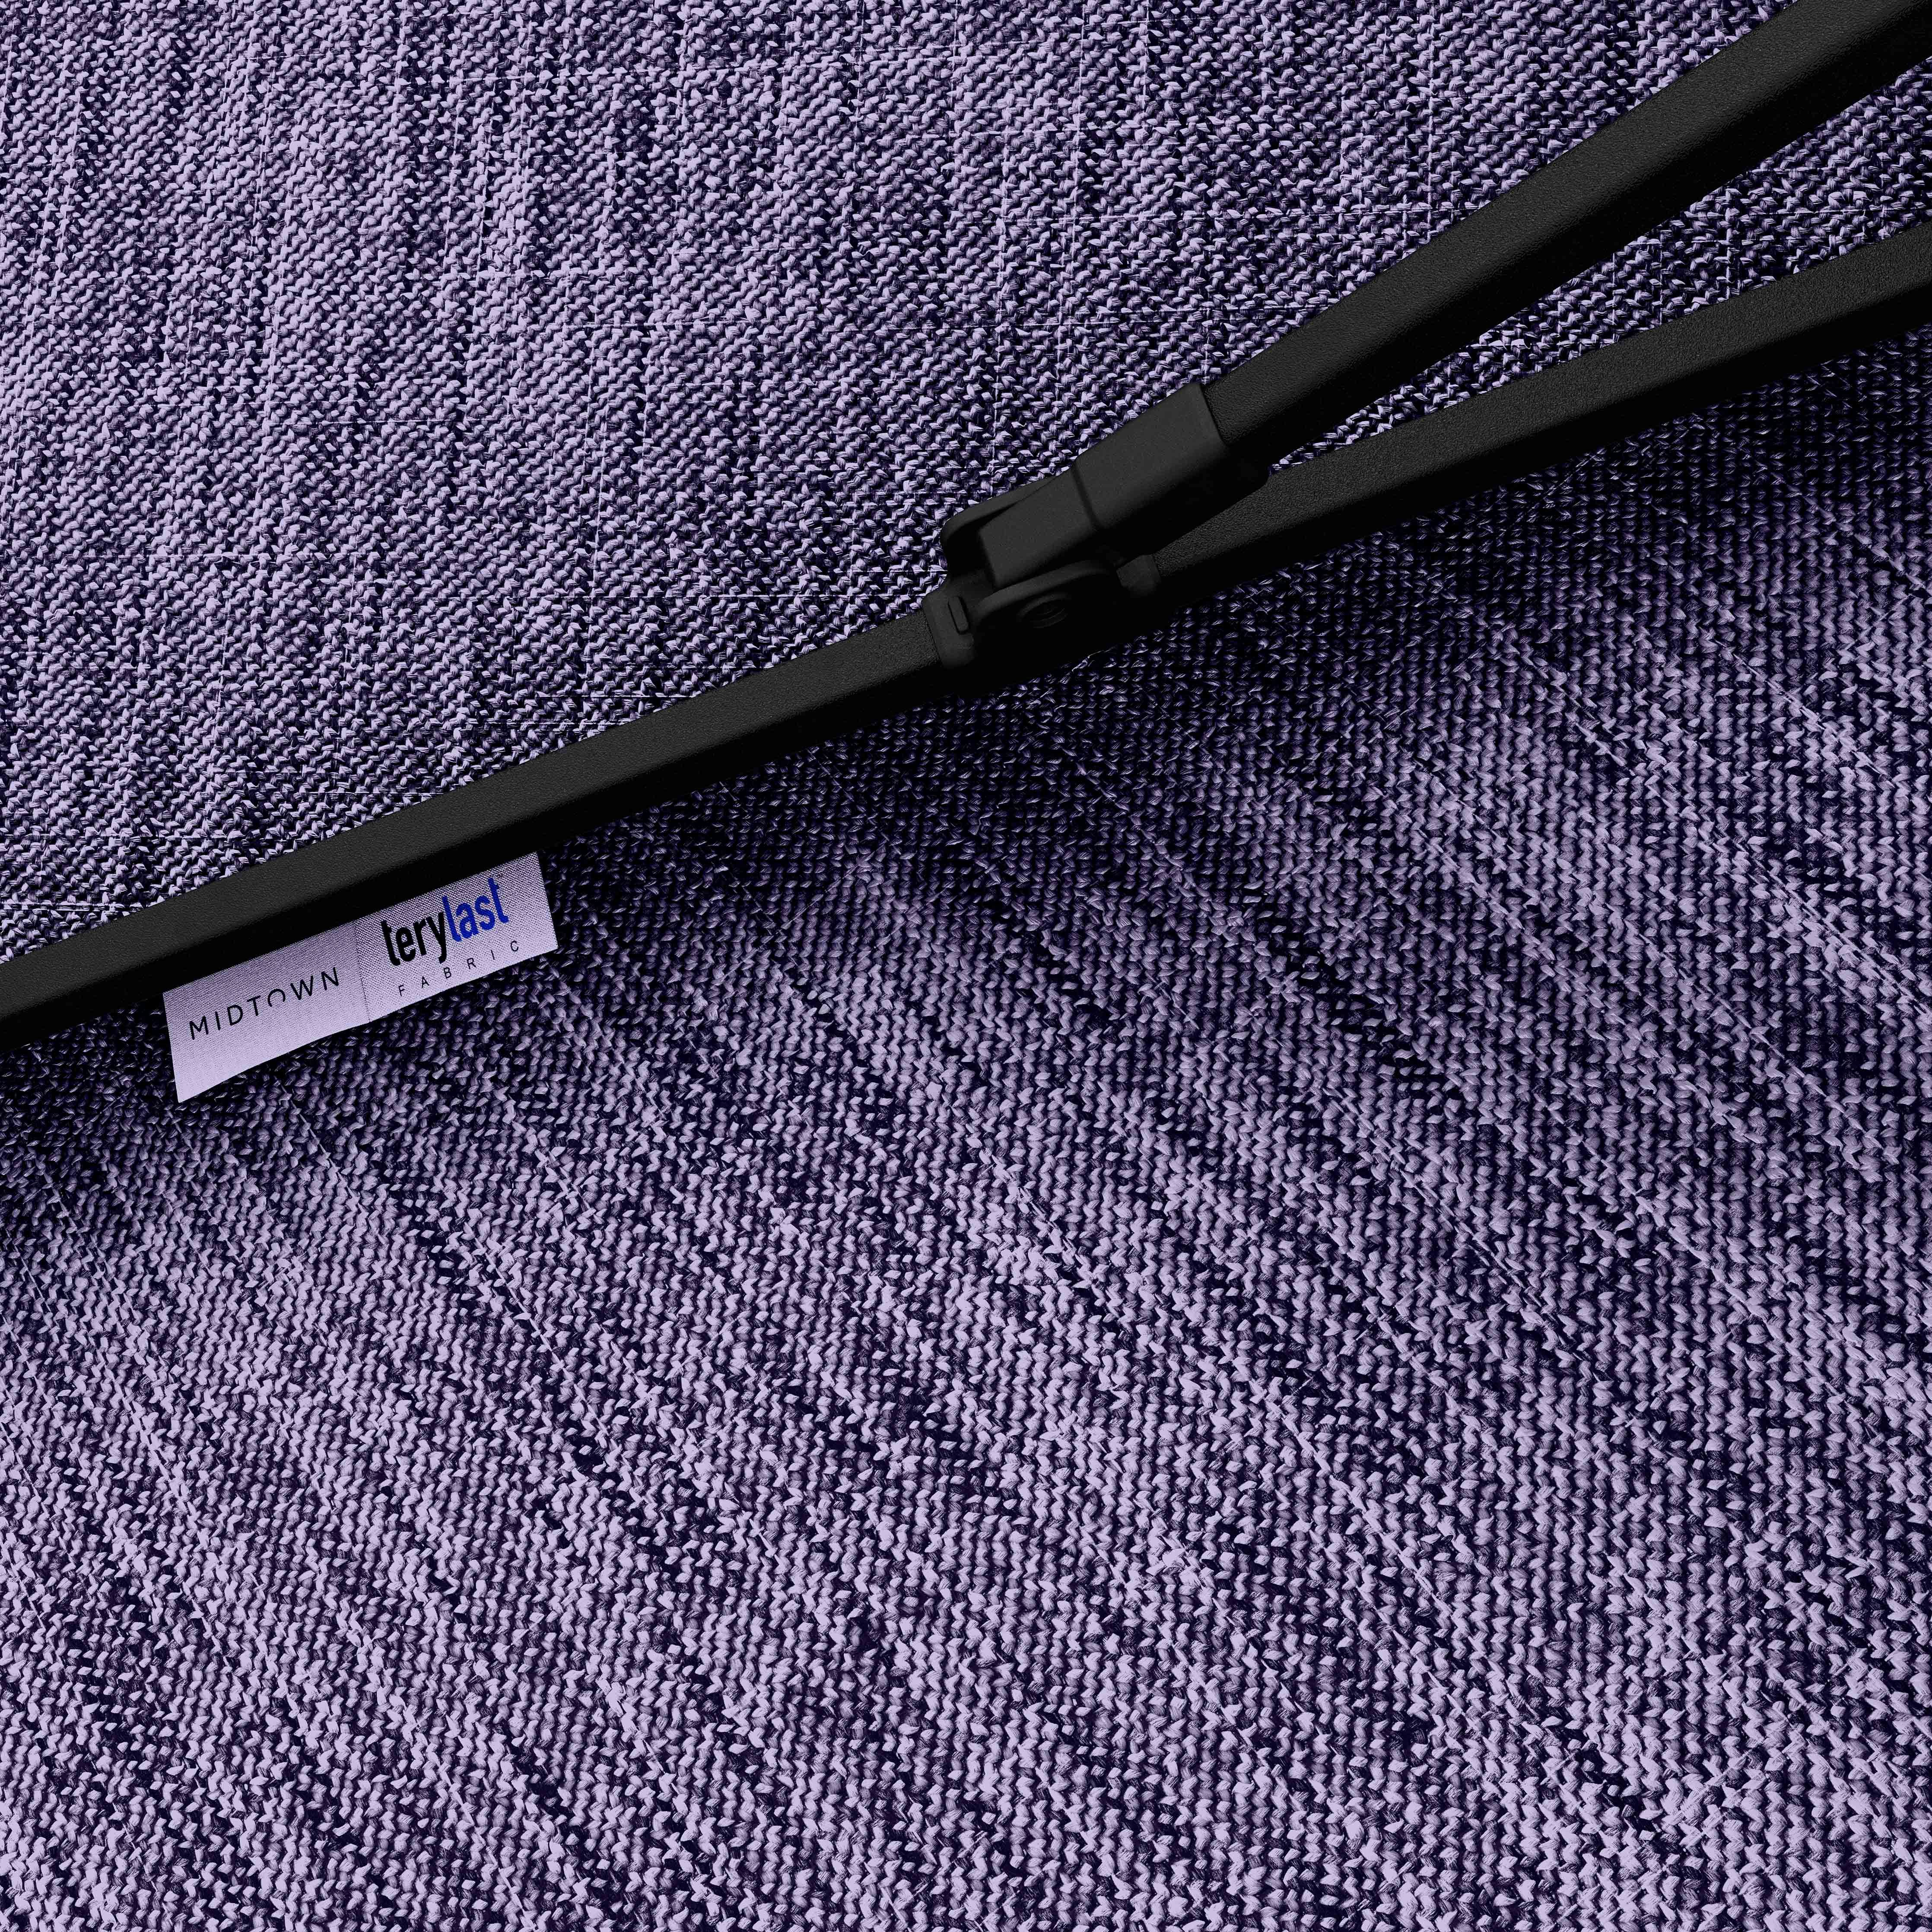 The Lean™ - Terylast Textured Purple